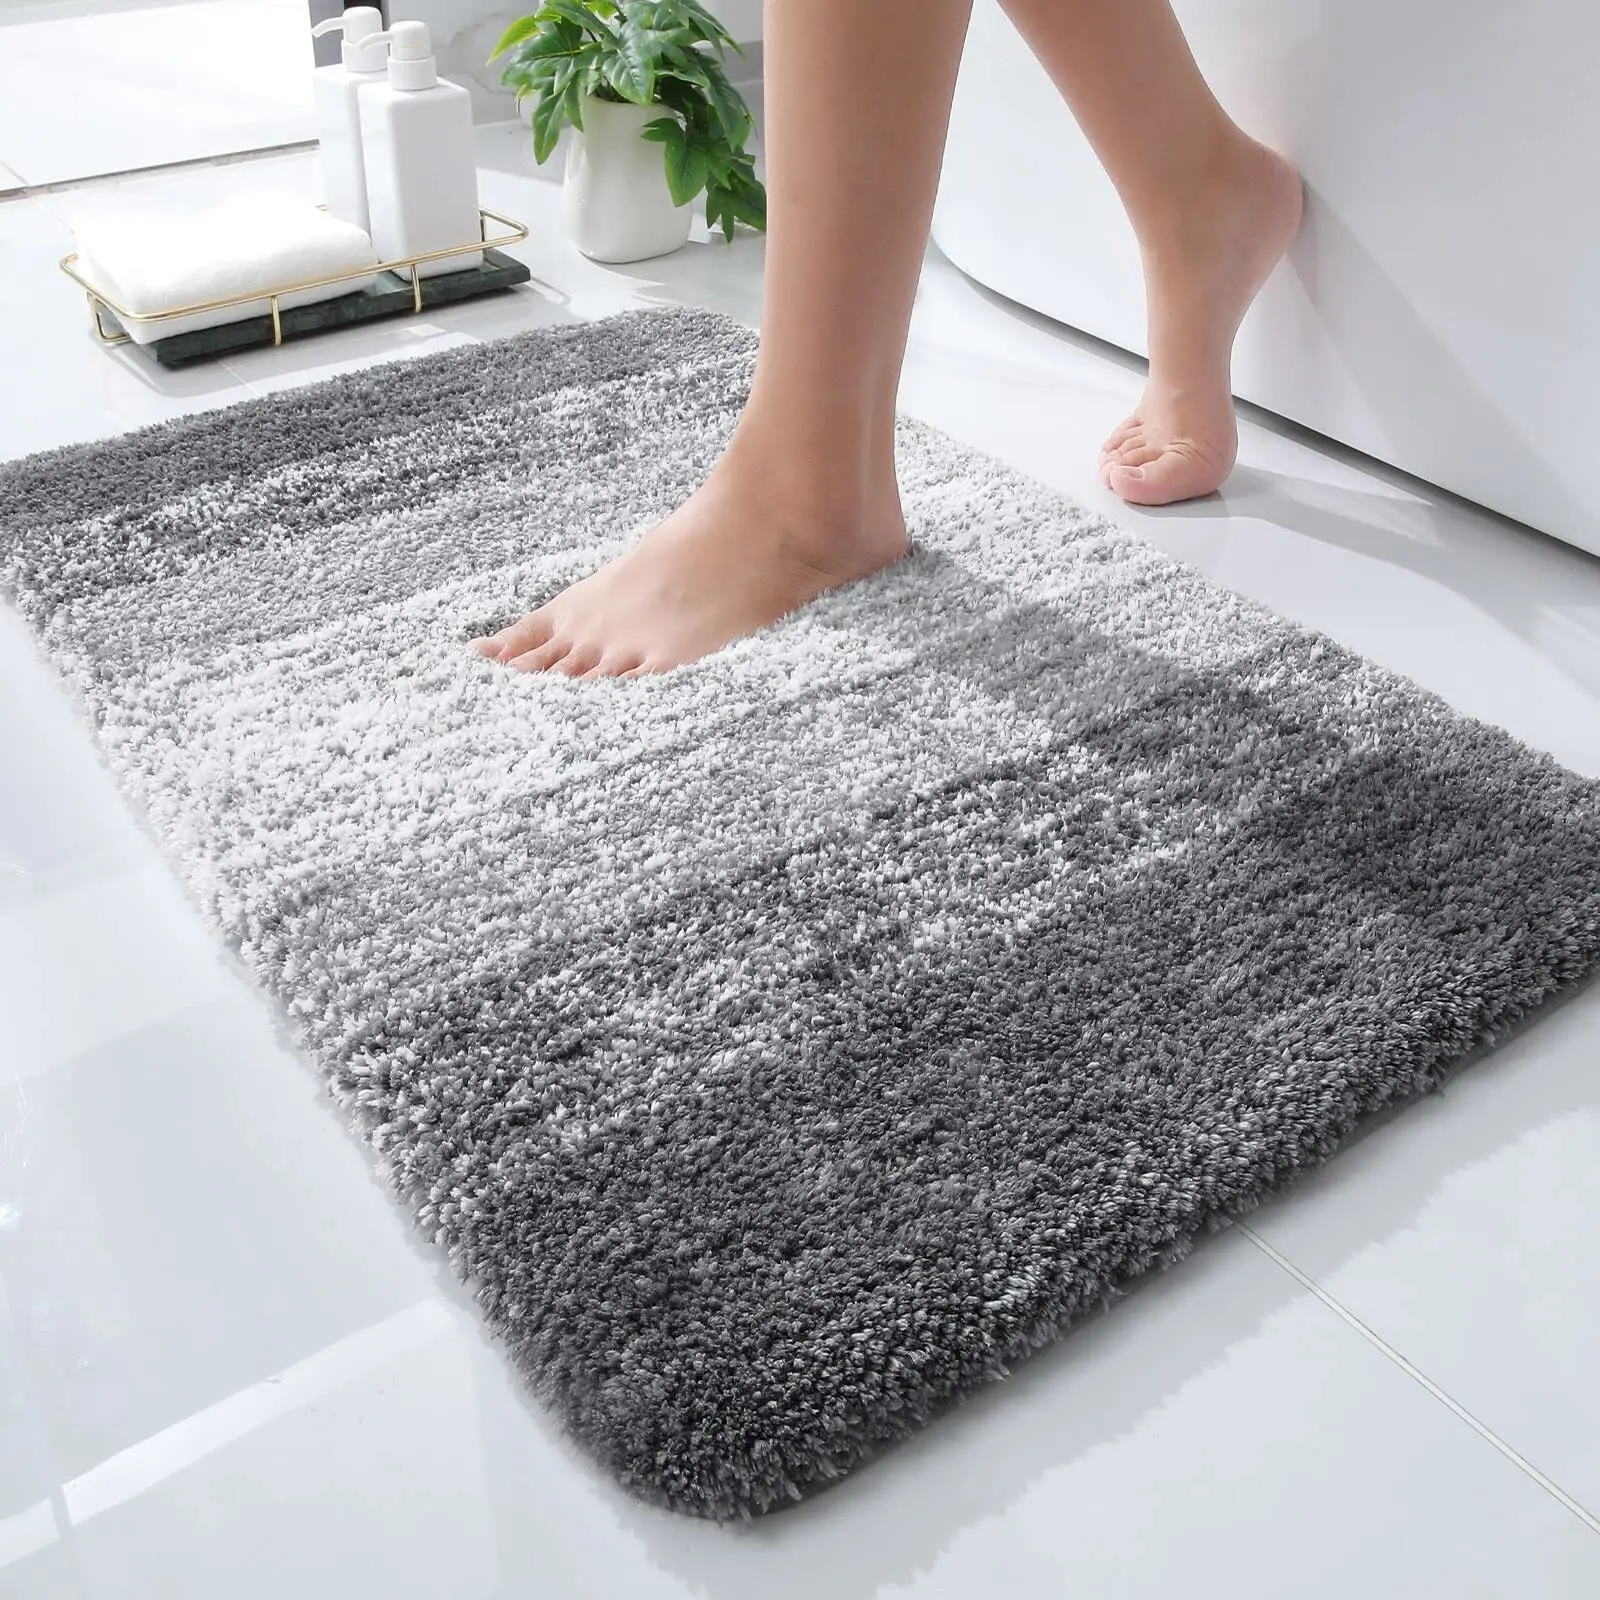 

Luxury Bathroom Rug Mat,Extra Soft and Absorbent Microfiber Bath Rugs,Non-Slip Plush Shaggy Bath Carpet,Machine Wash Dry